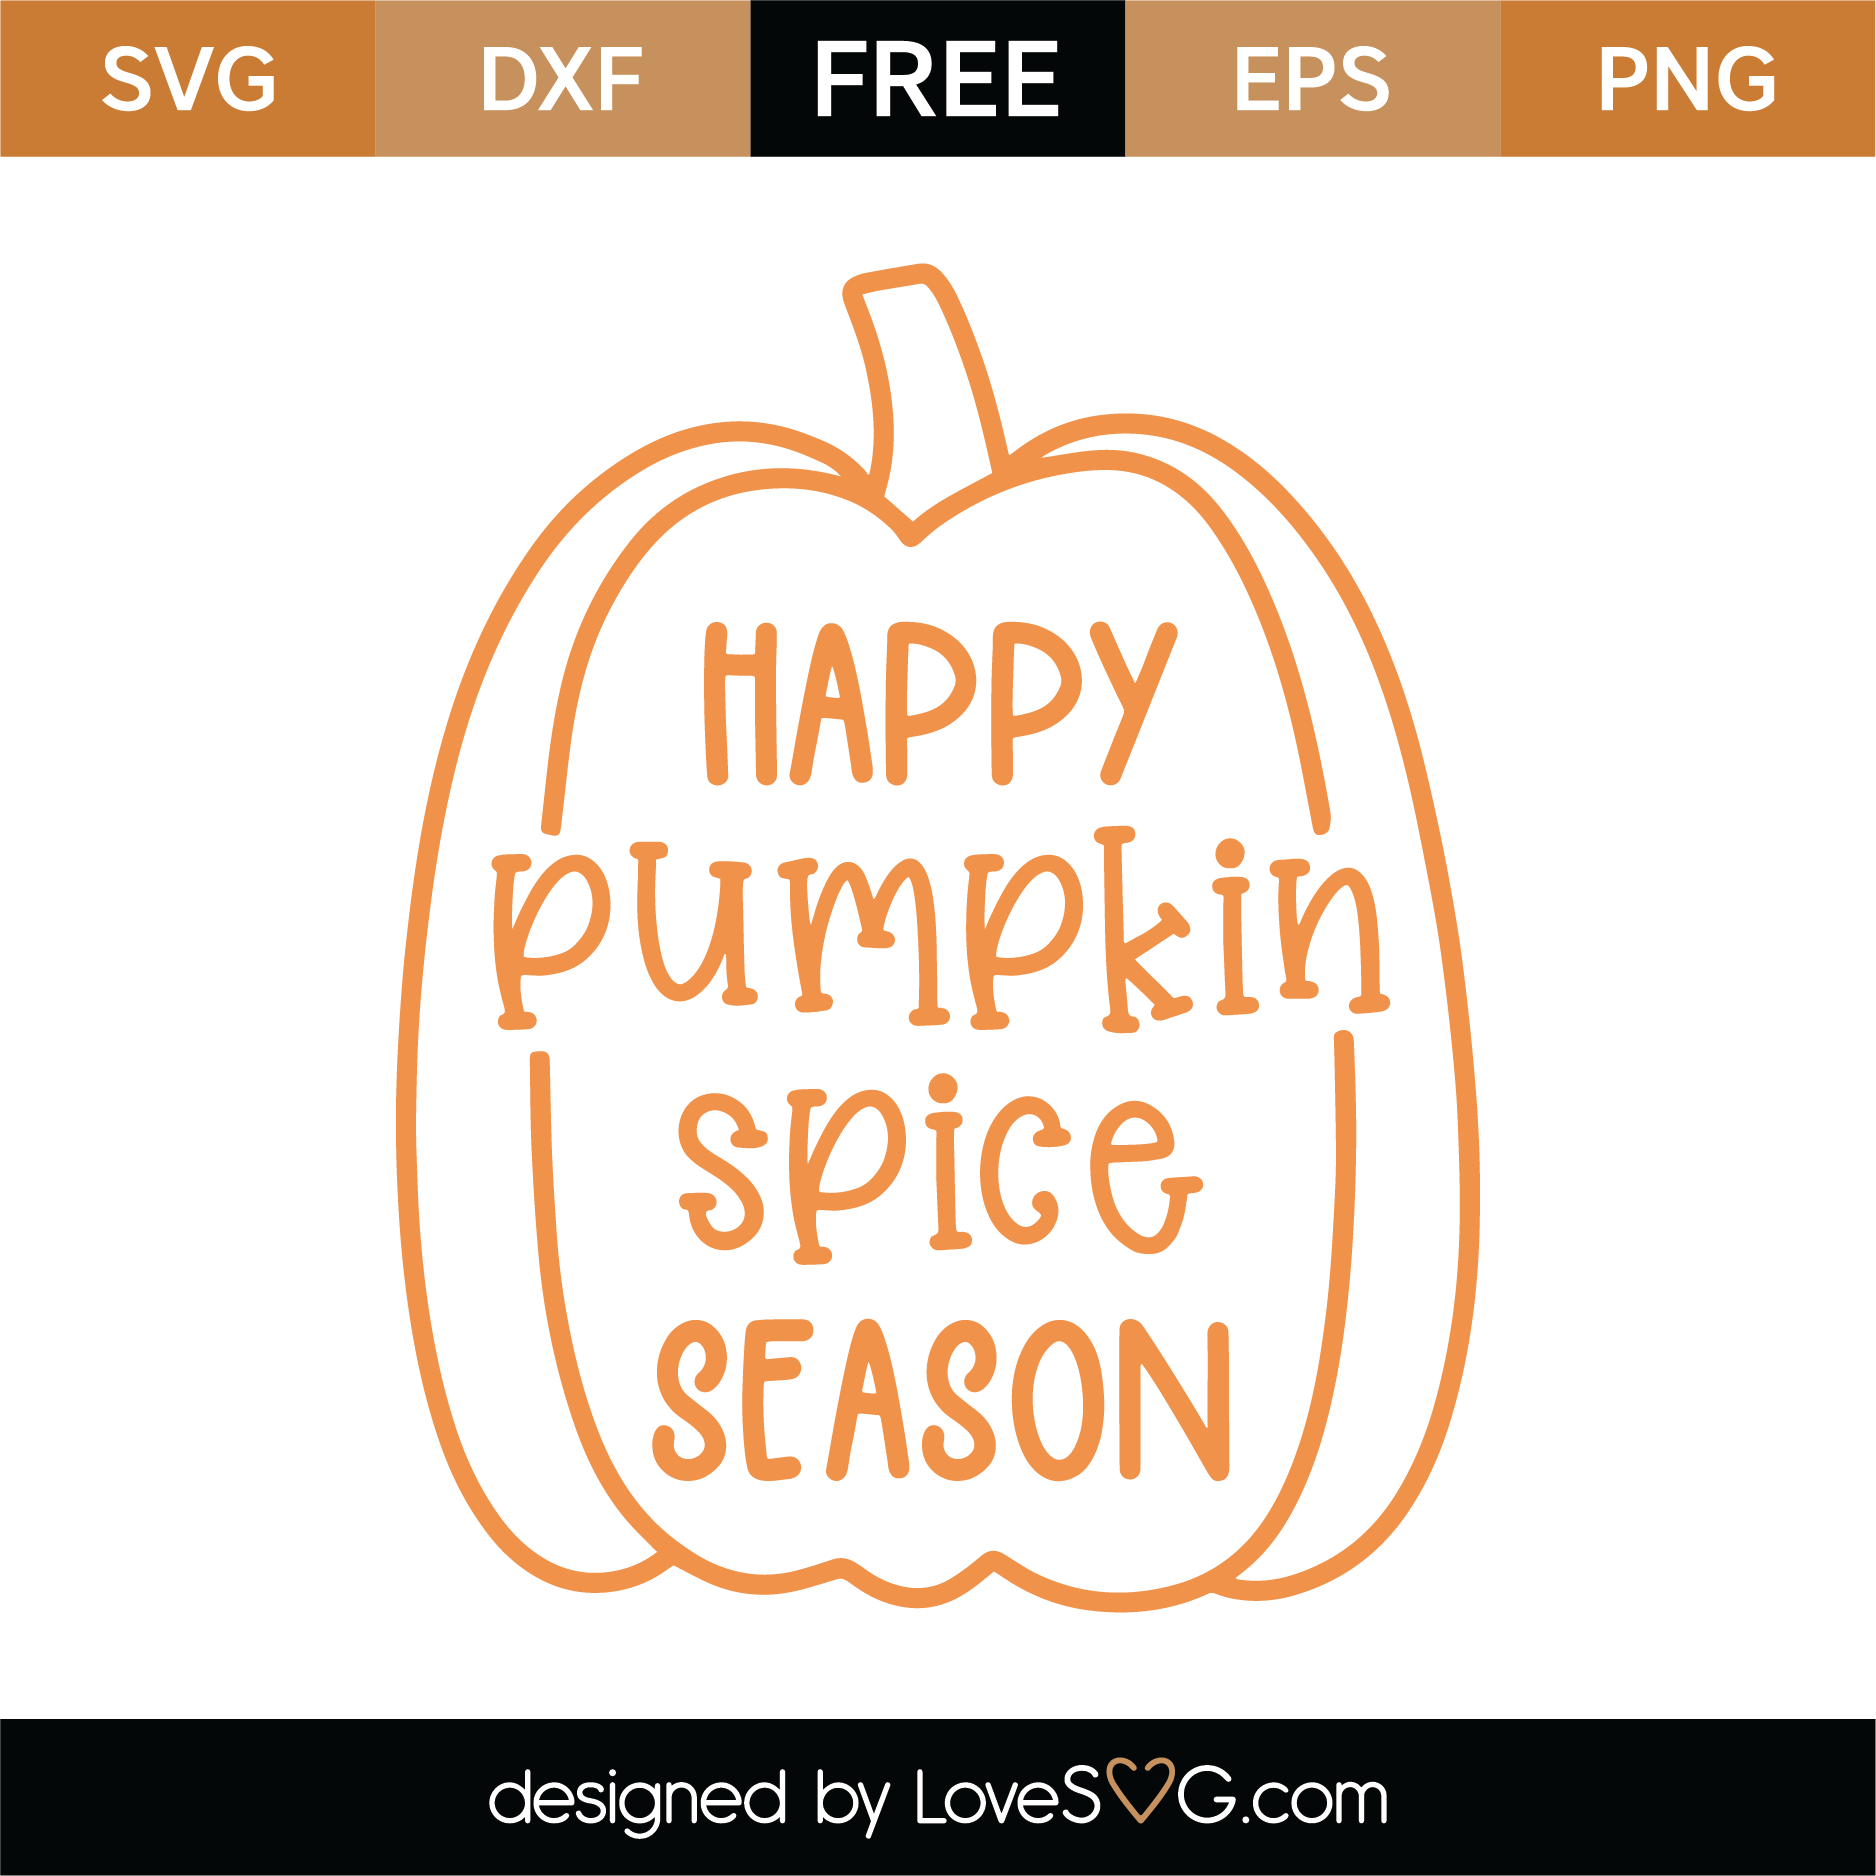 Download Free Happy Pumpkin Spice Season SVG Cut File | Lovesvg.com